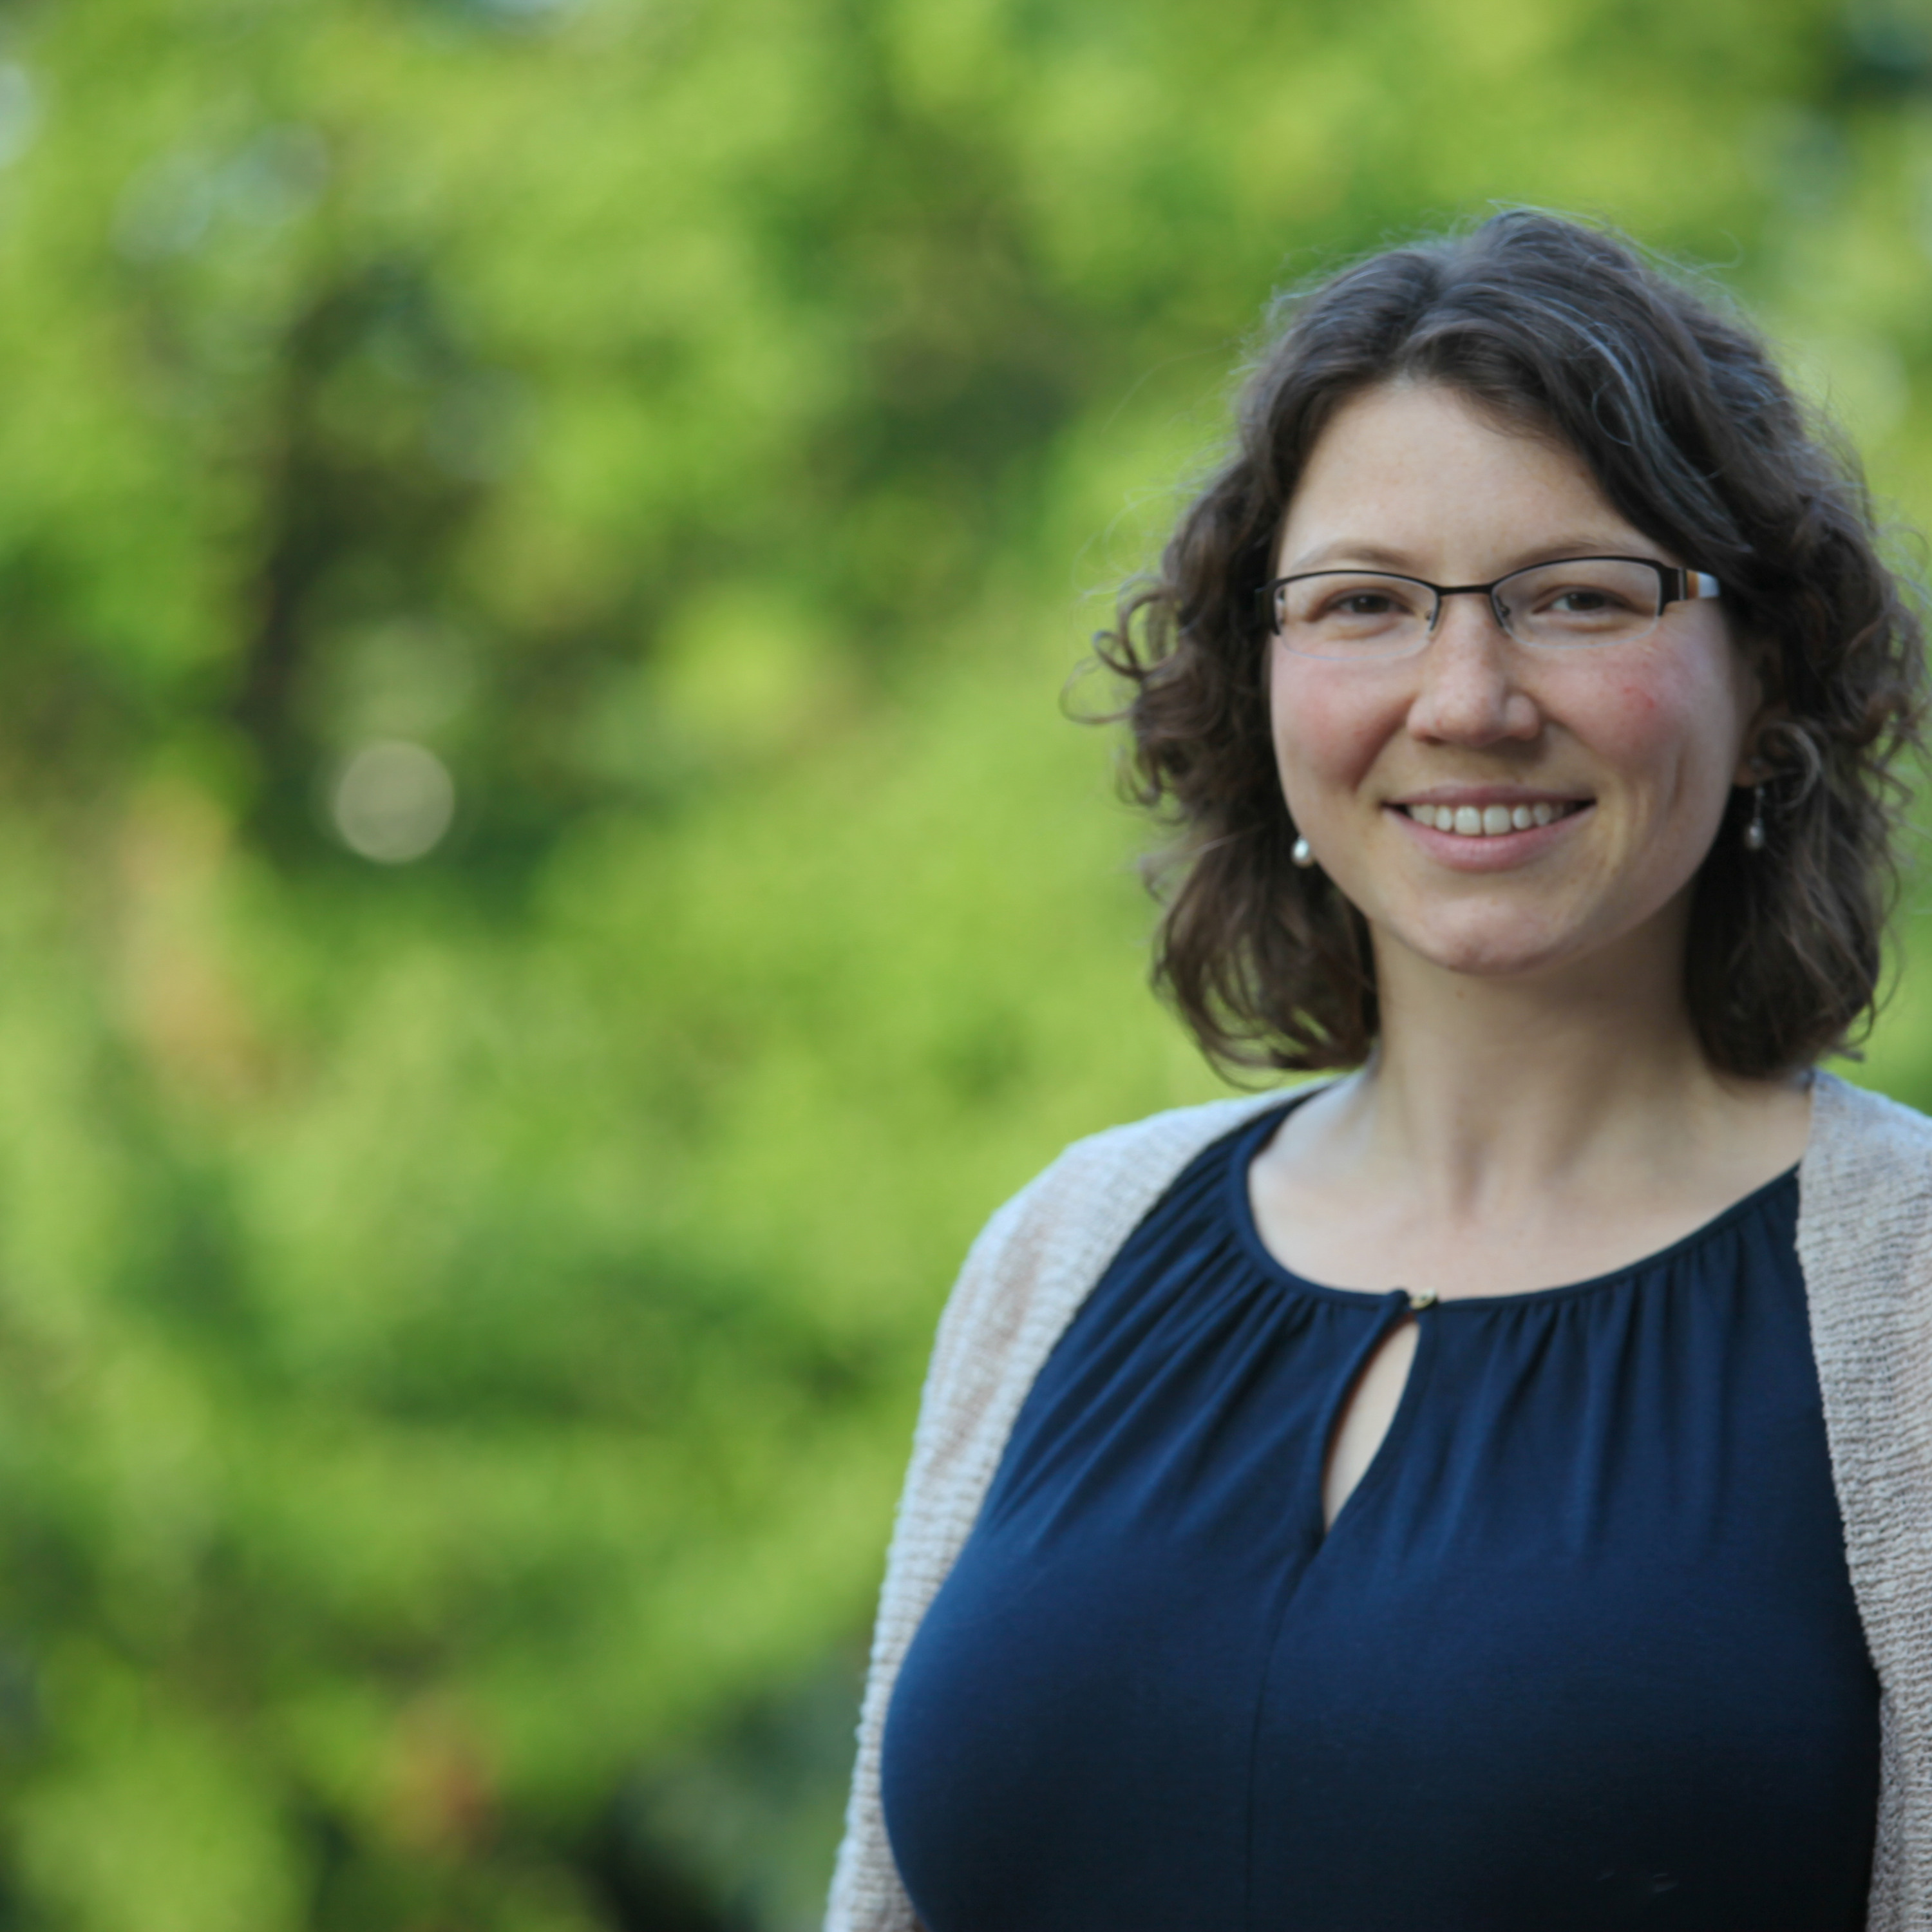 New Faculty 2014: Meet Molly Thomasy Blasing